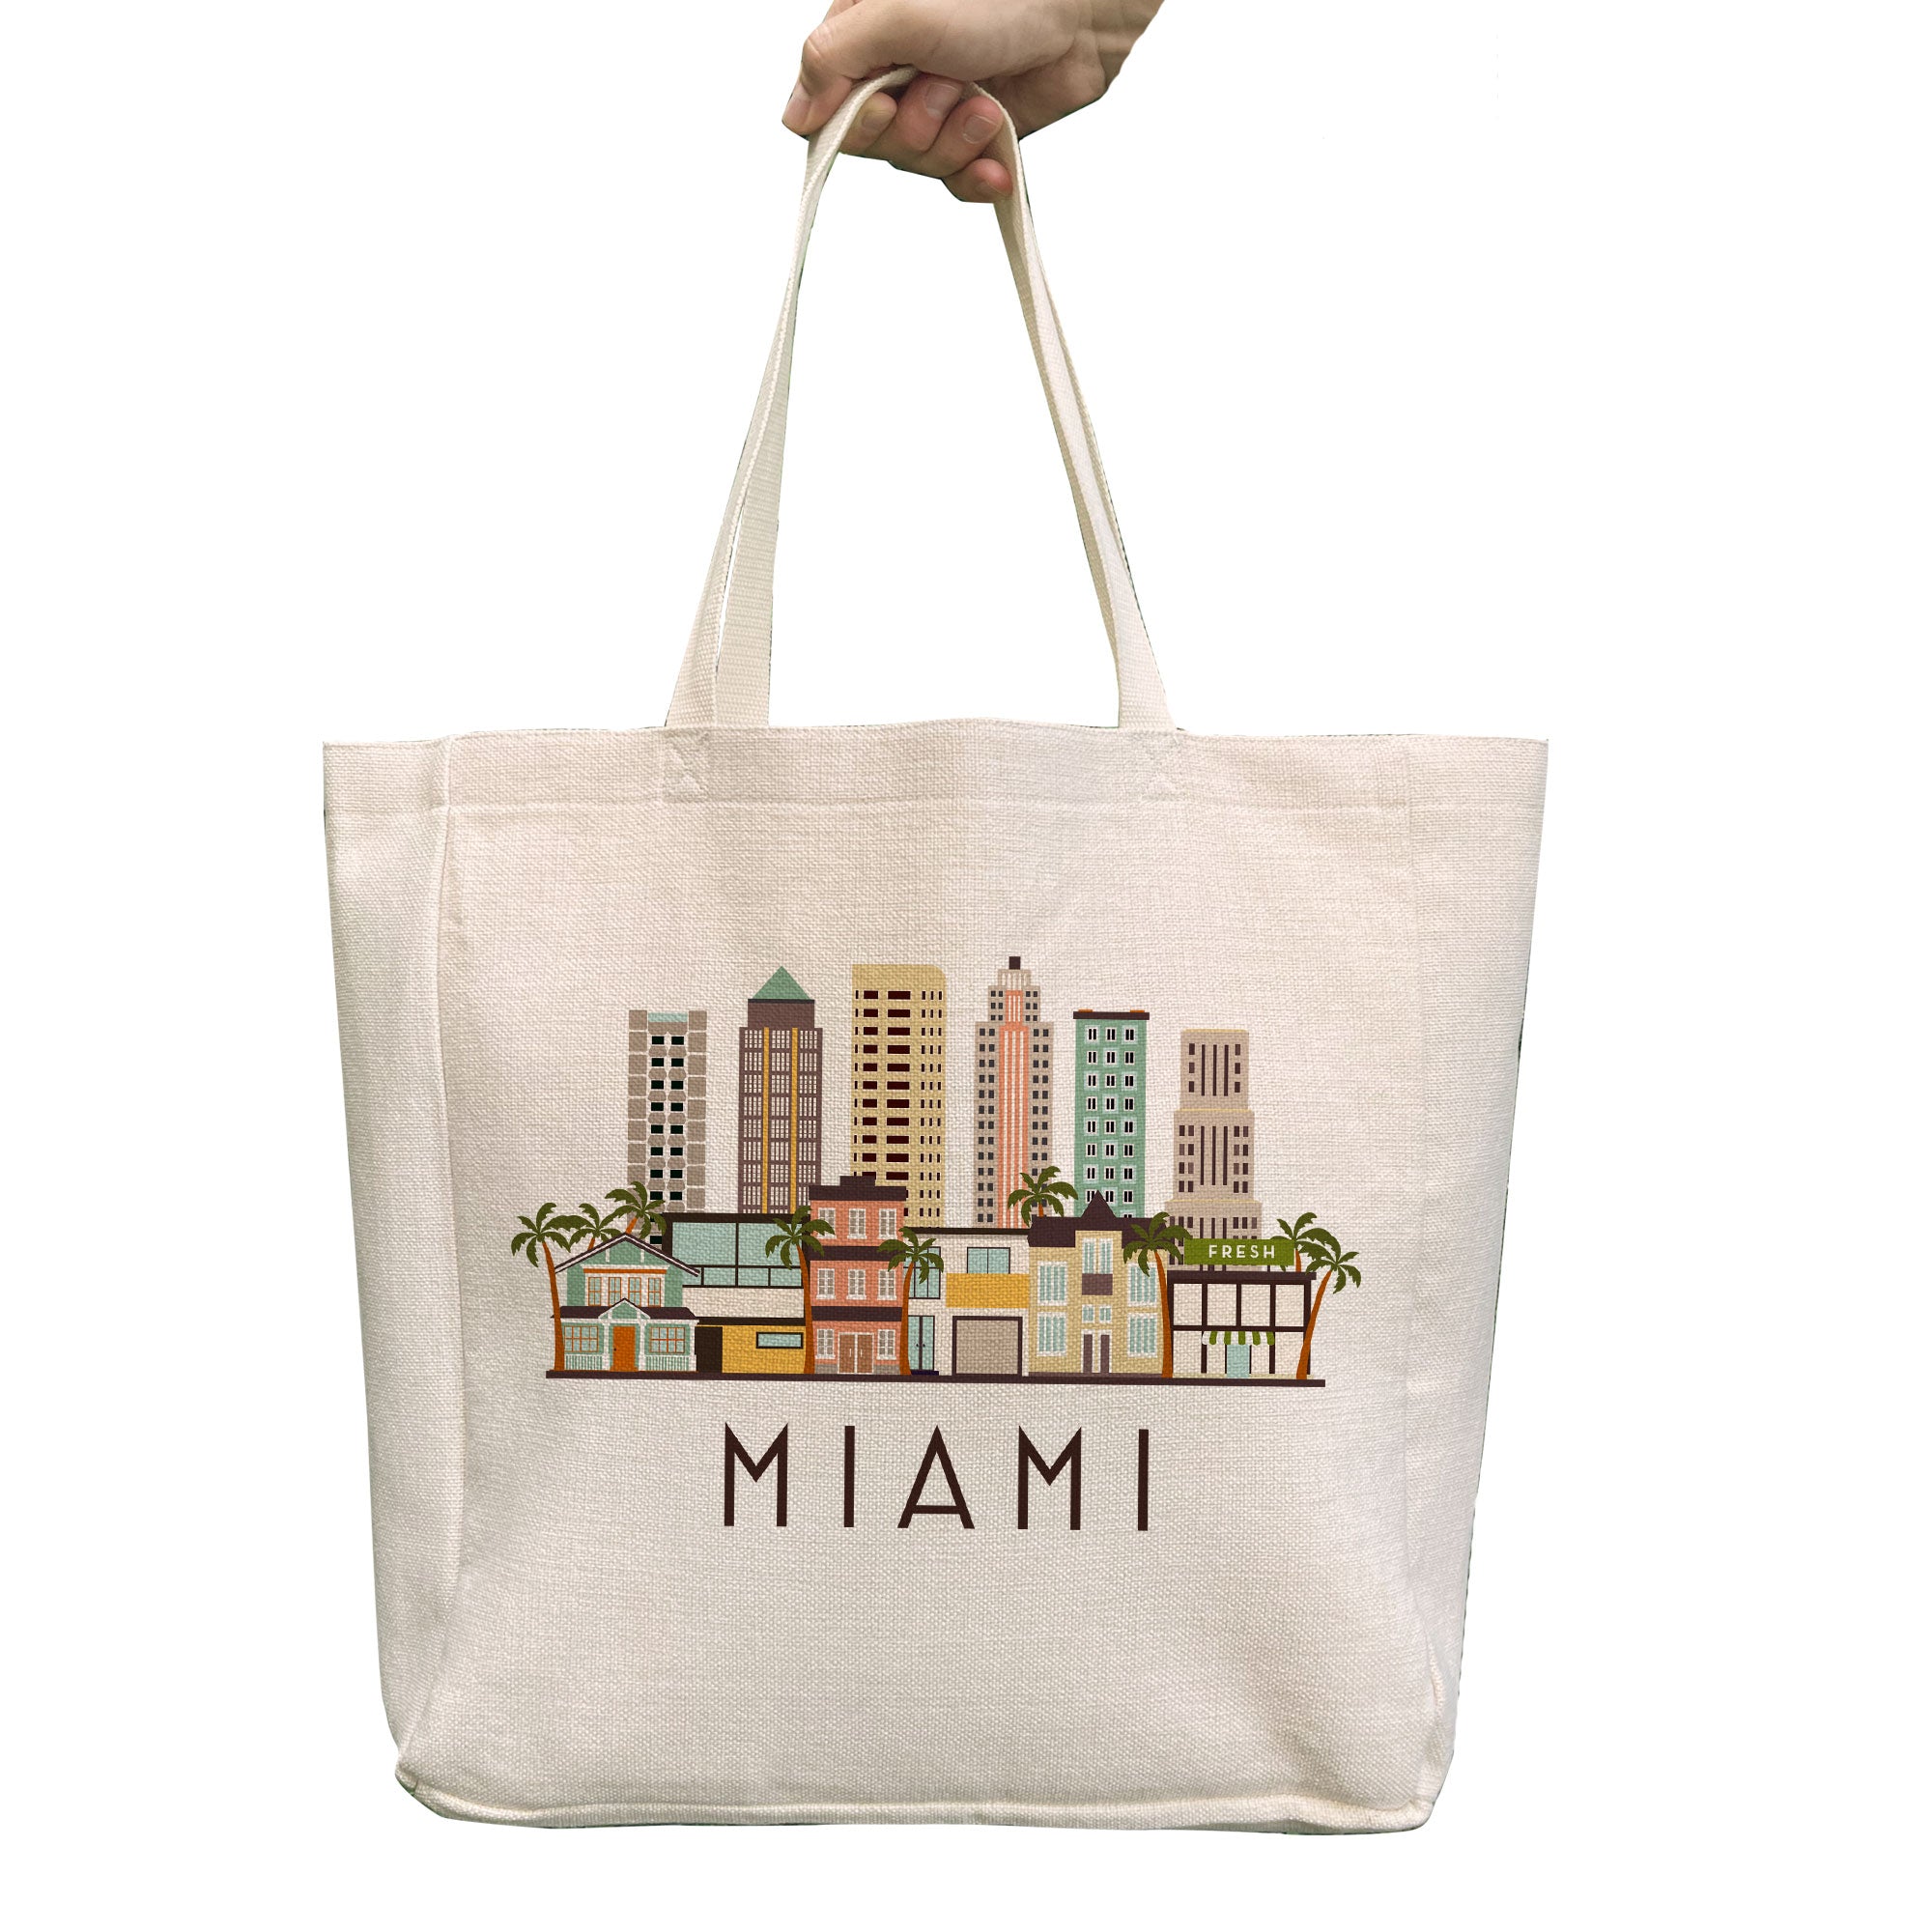 Miami Florida City Skyline Tote Bag | Large Shopping Tote Beach Bag